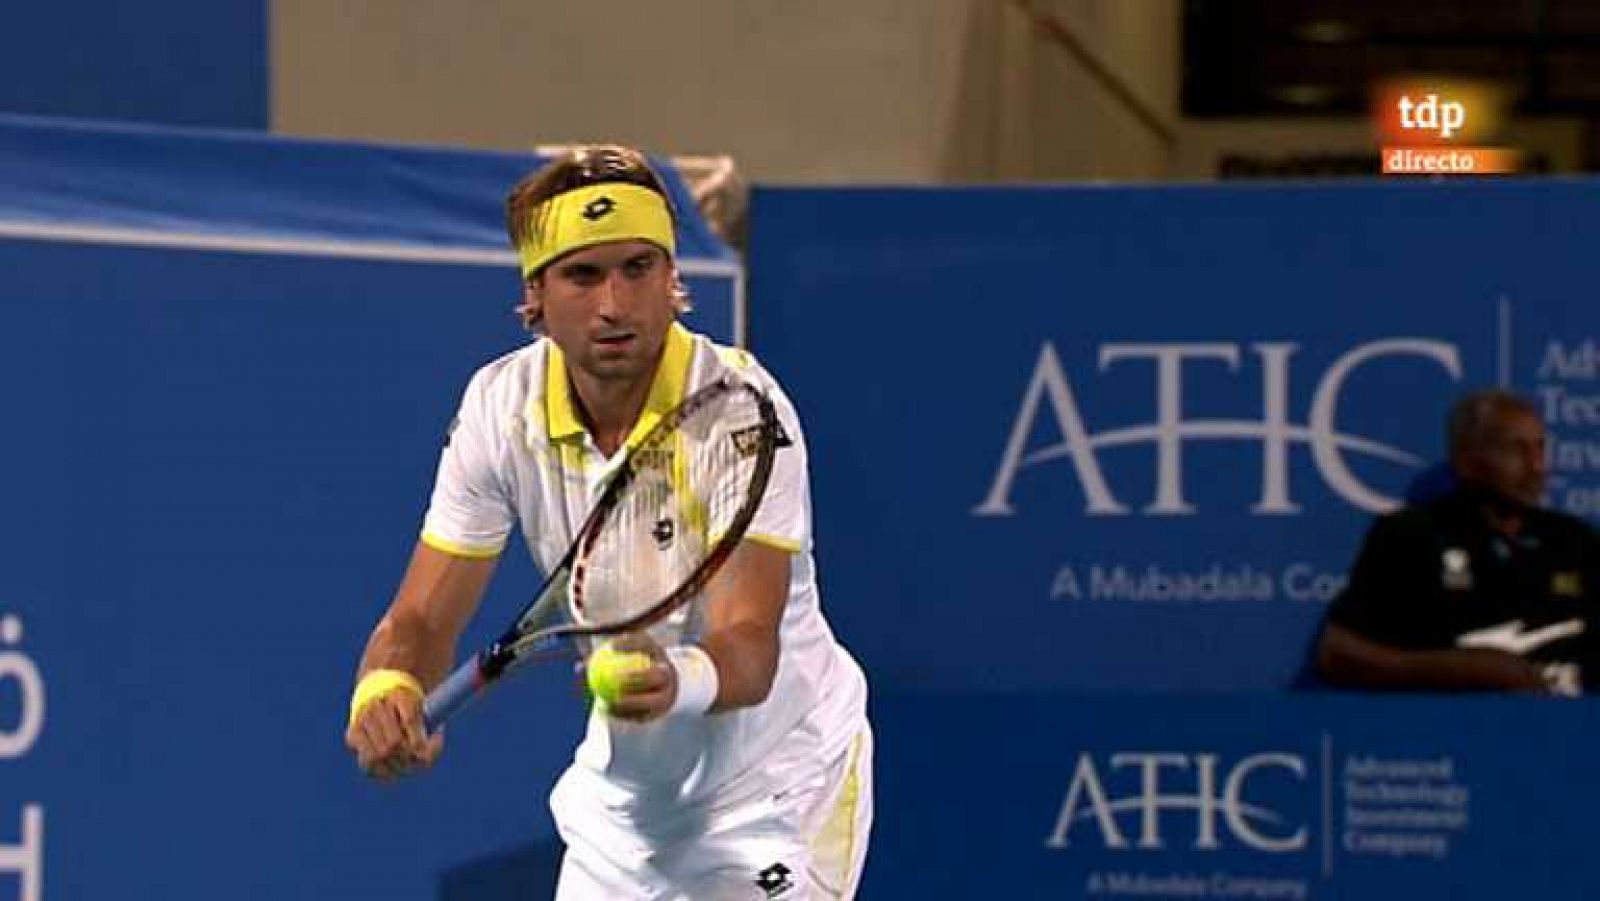 Tenis - Mubadala World Tennis Championship - D. Ferrer-T. Berdych